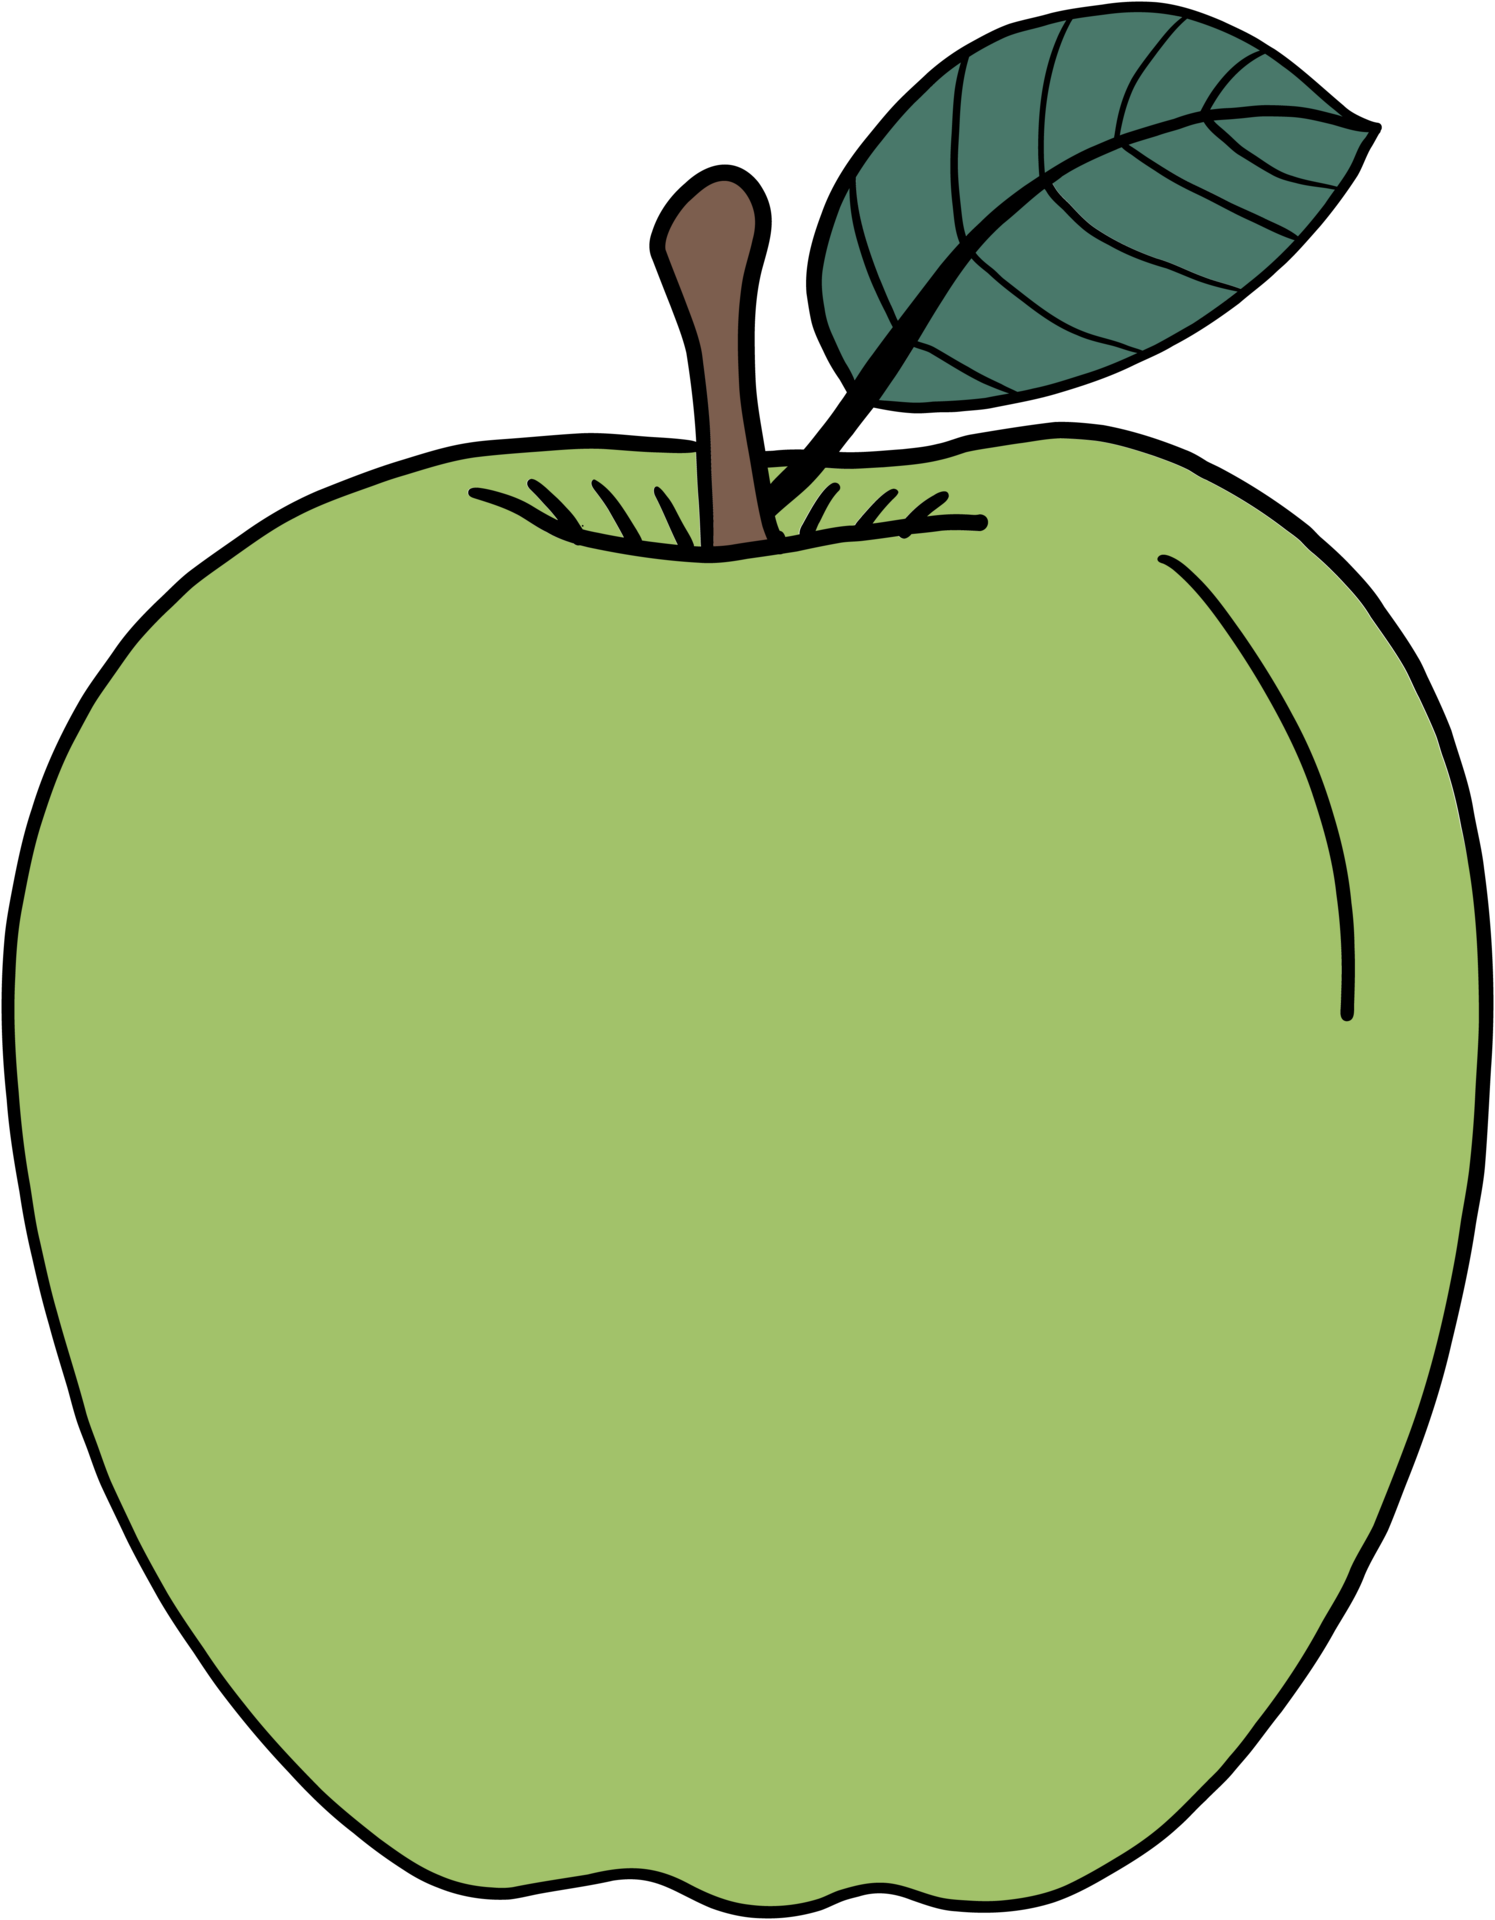 Apple Fruit Set Hand Drawn Vector Illustration Sketch Stock Vector -  Illustration of product, healthy: 124890690